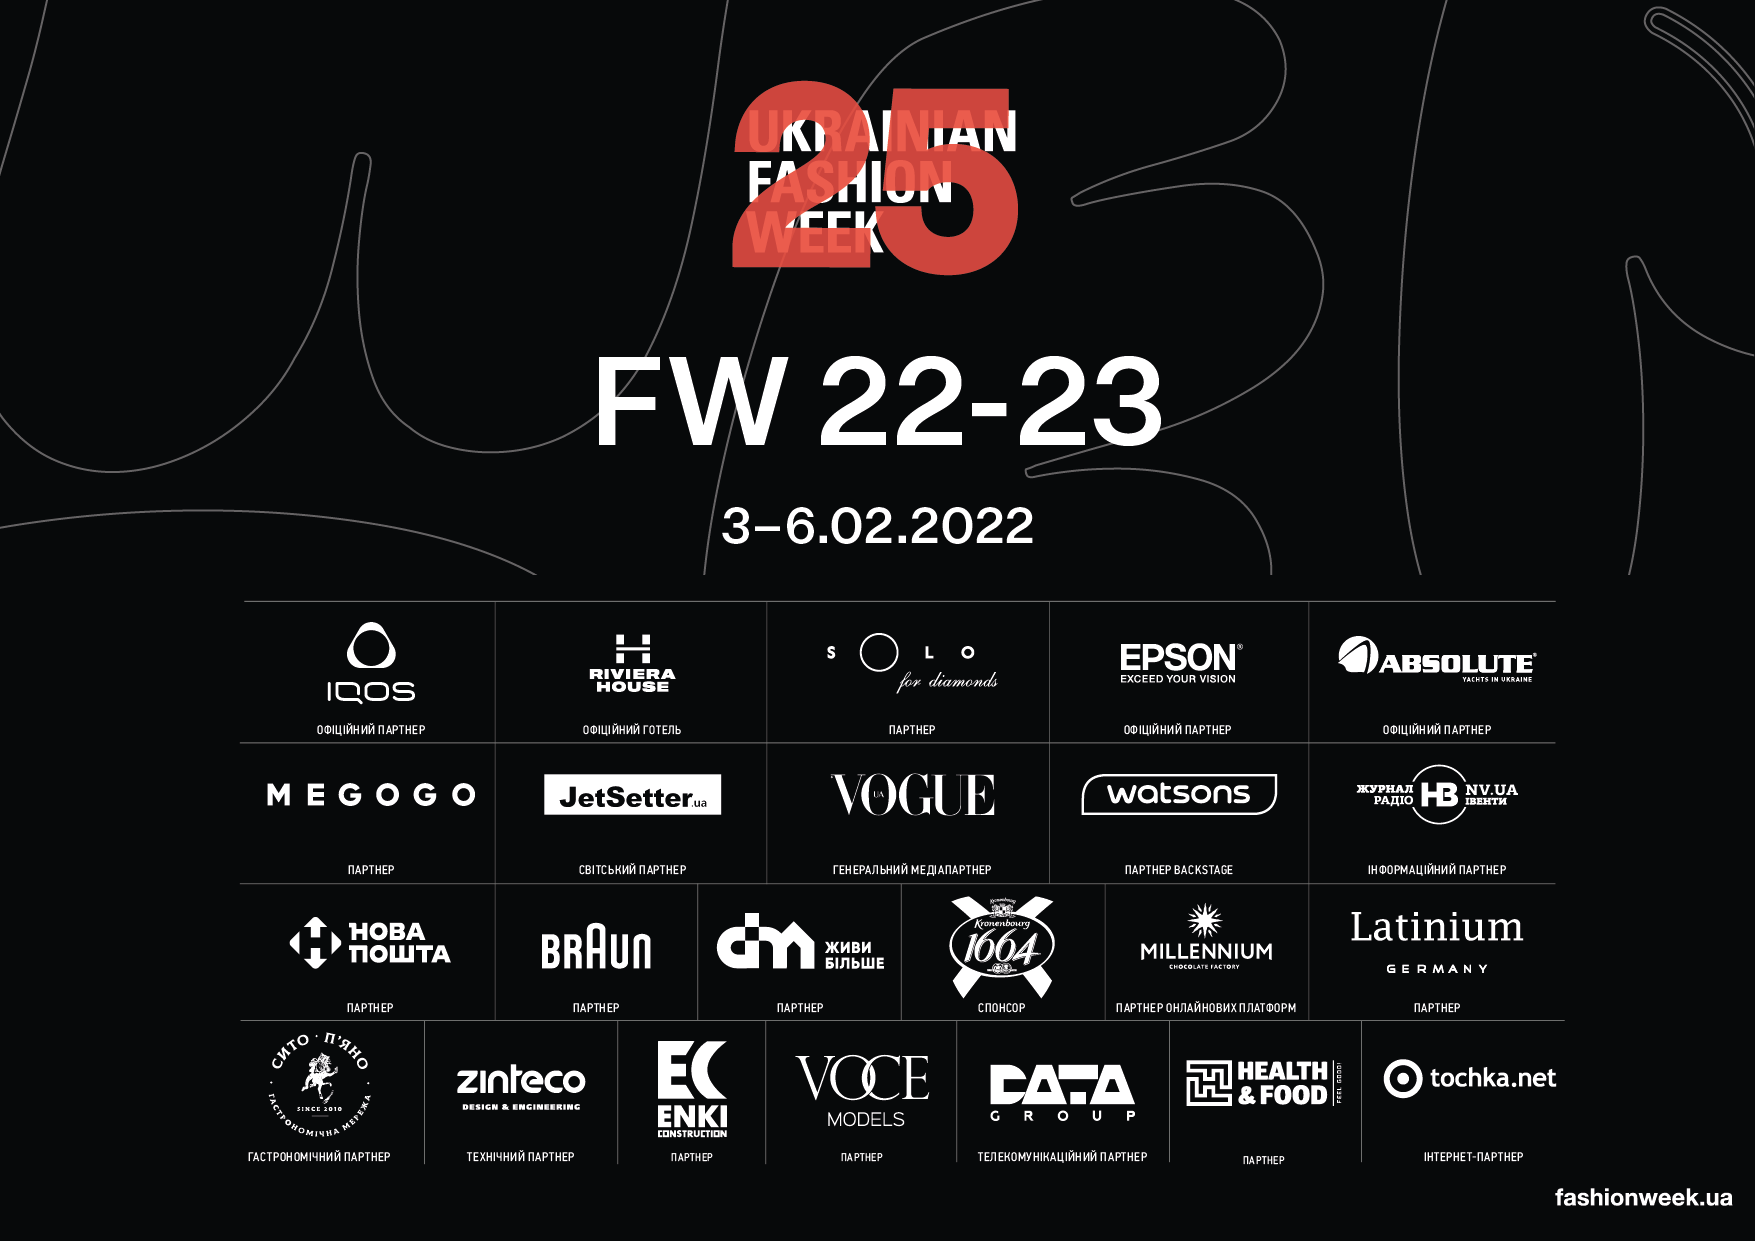 The program of Ukrainian Fashion Week FW22-23